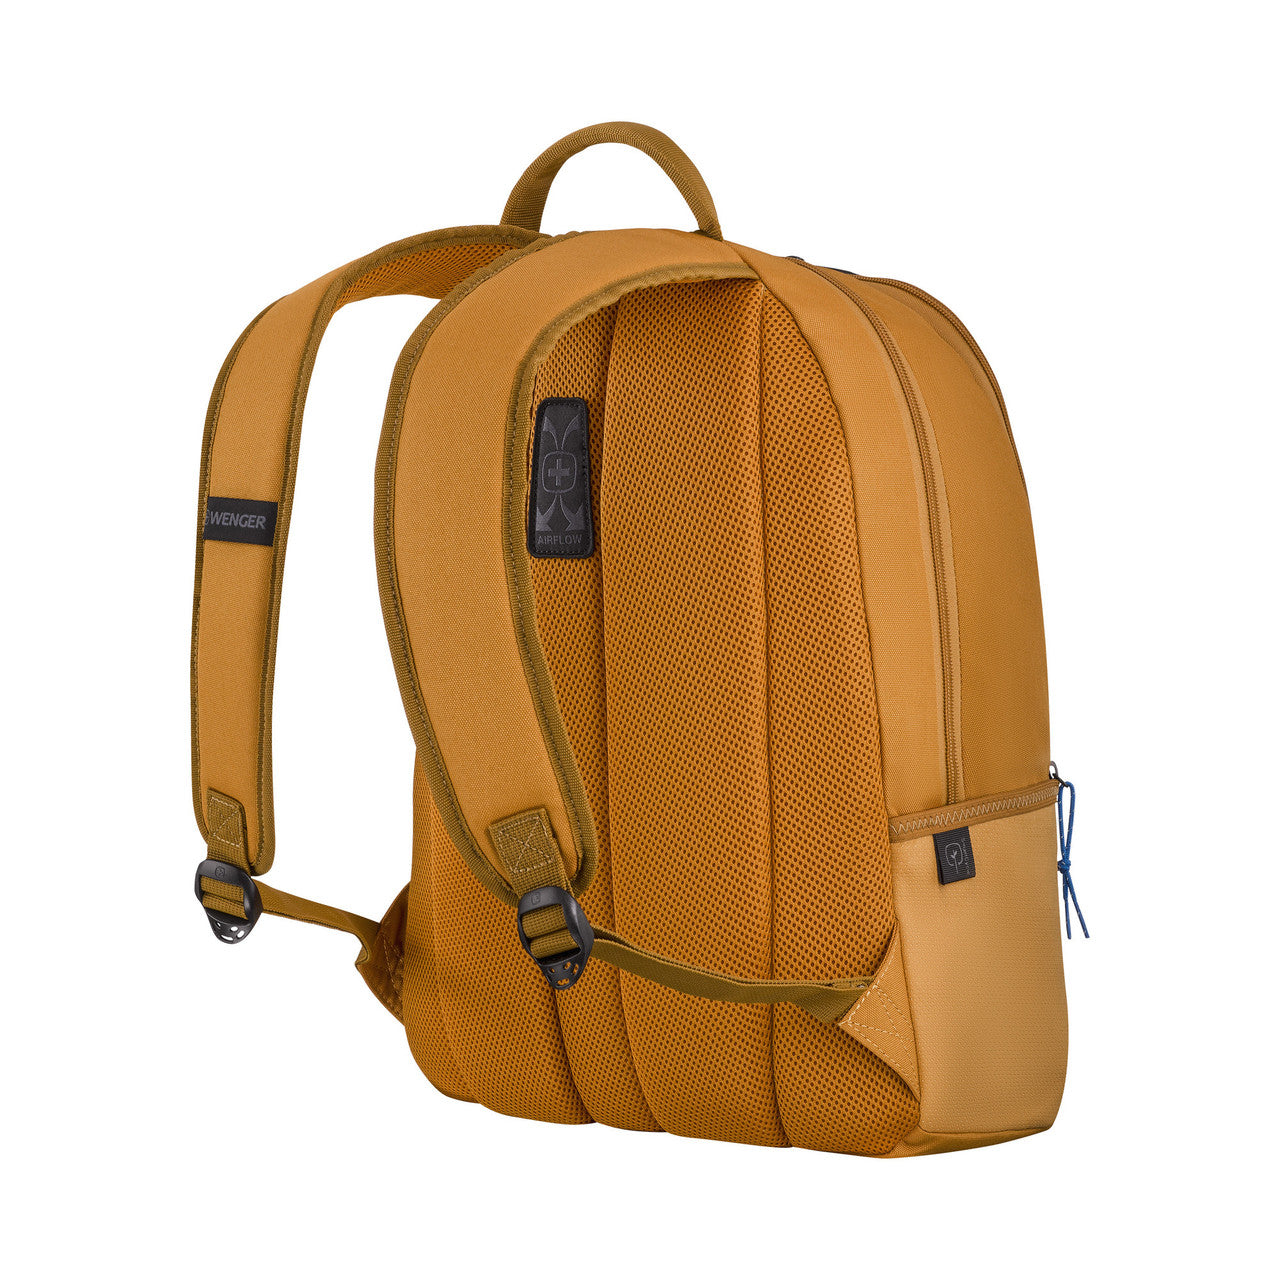 Wenger NEXT Trayl 15.6" Laptop Backpack